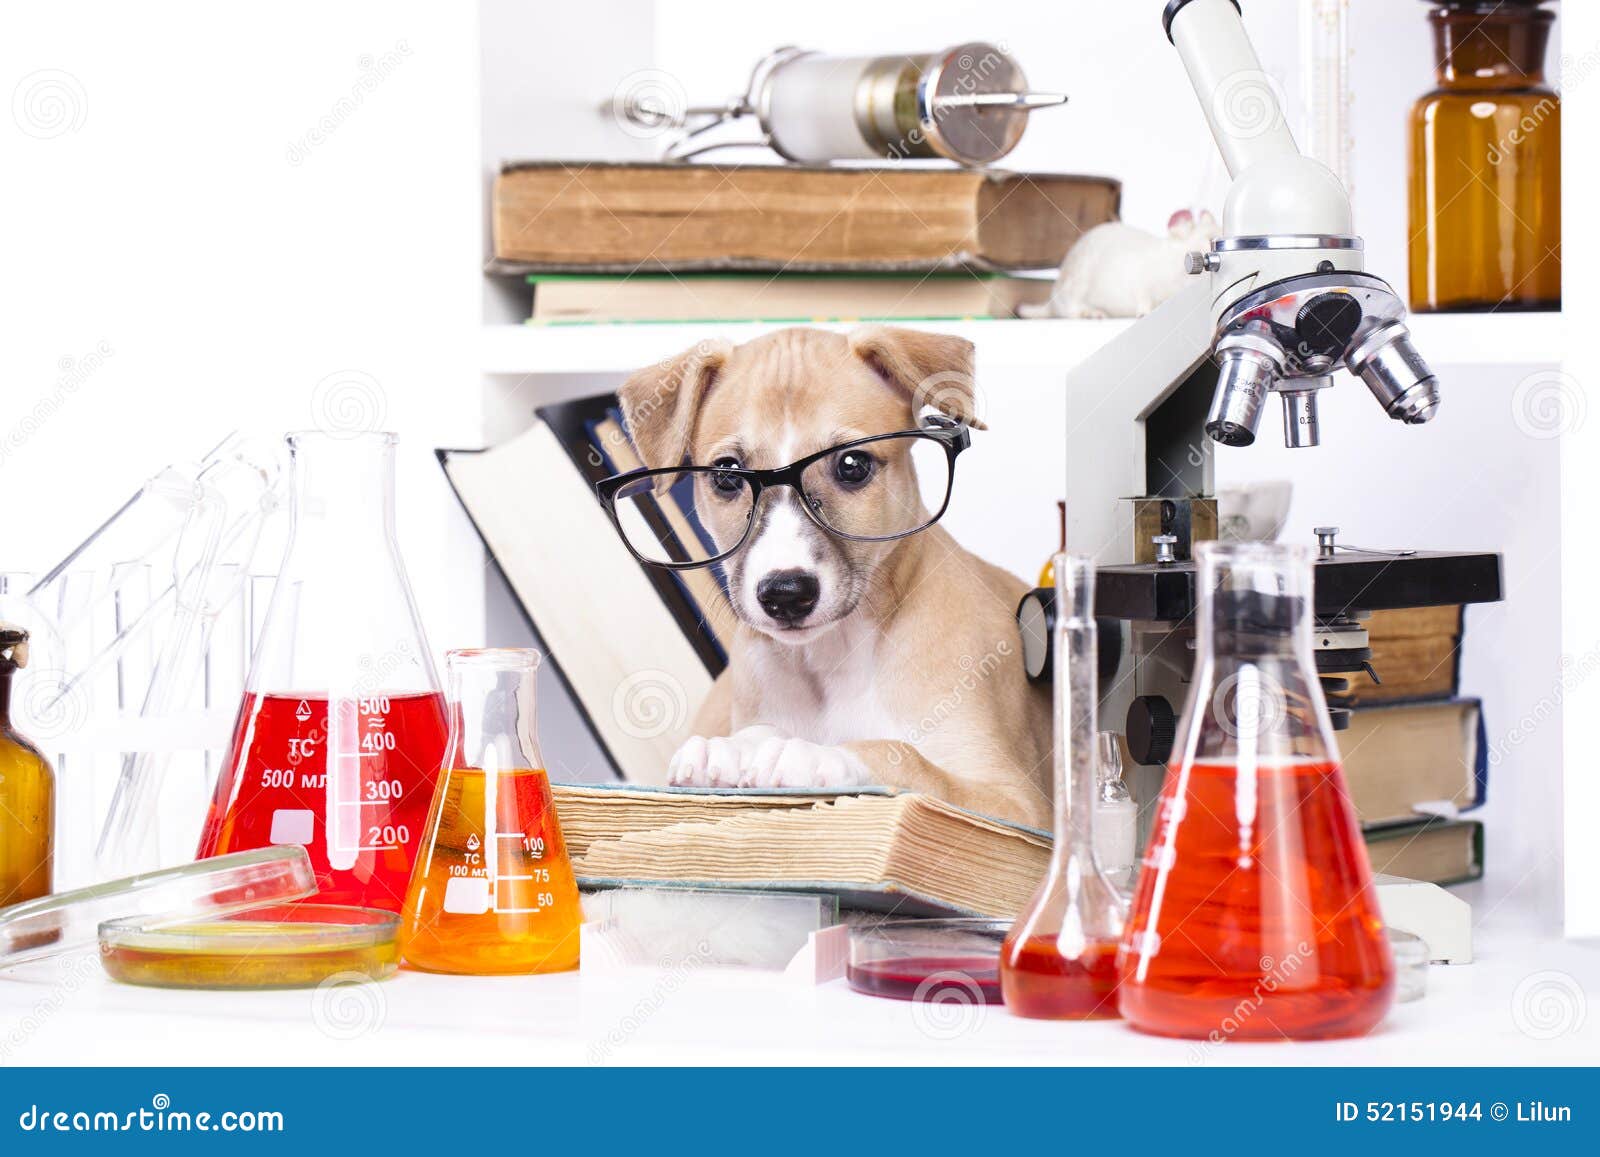 chemistry dog meme